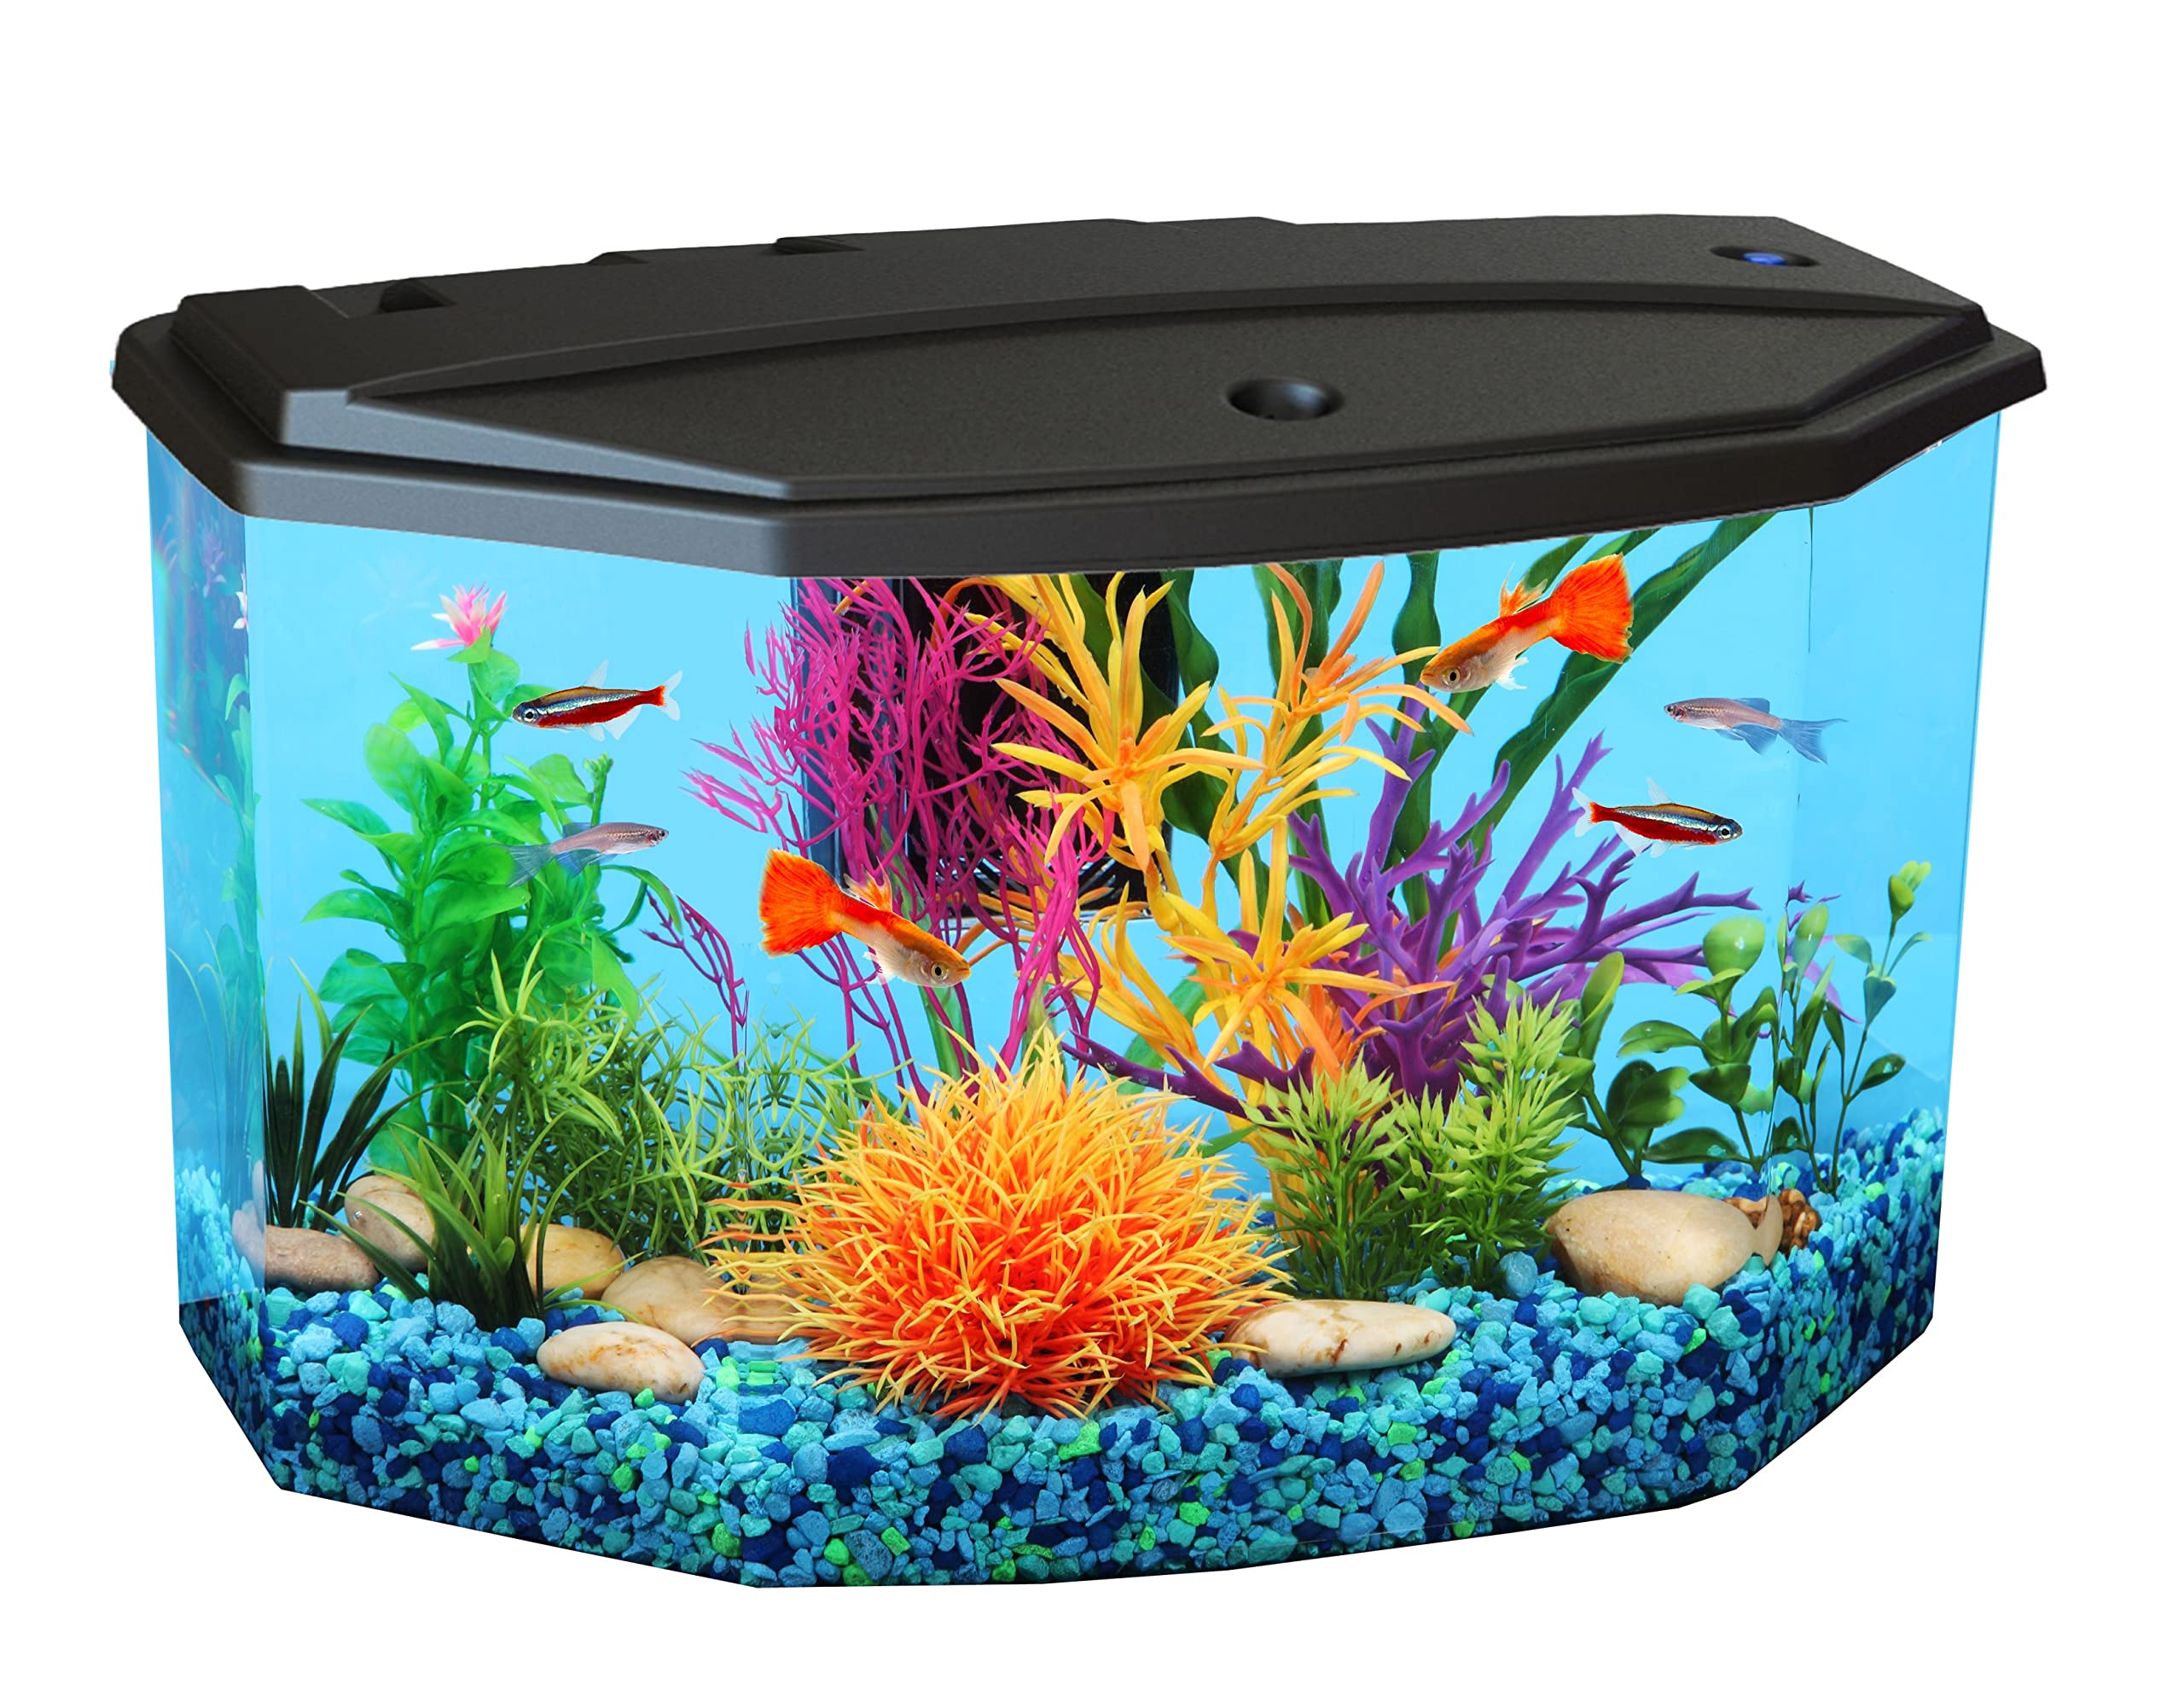 Koller Products AquaView 3-Gallon Aquarium Starter Kit